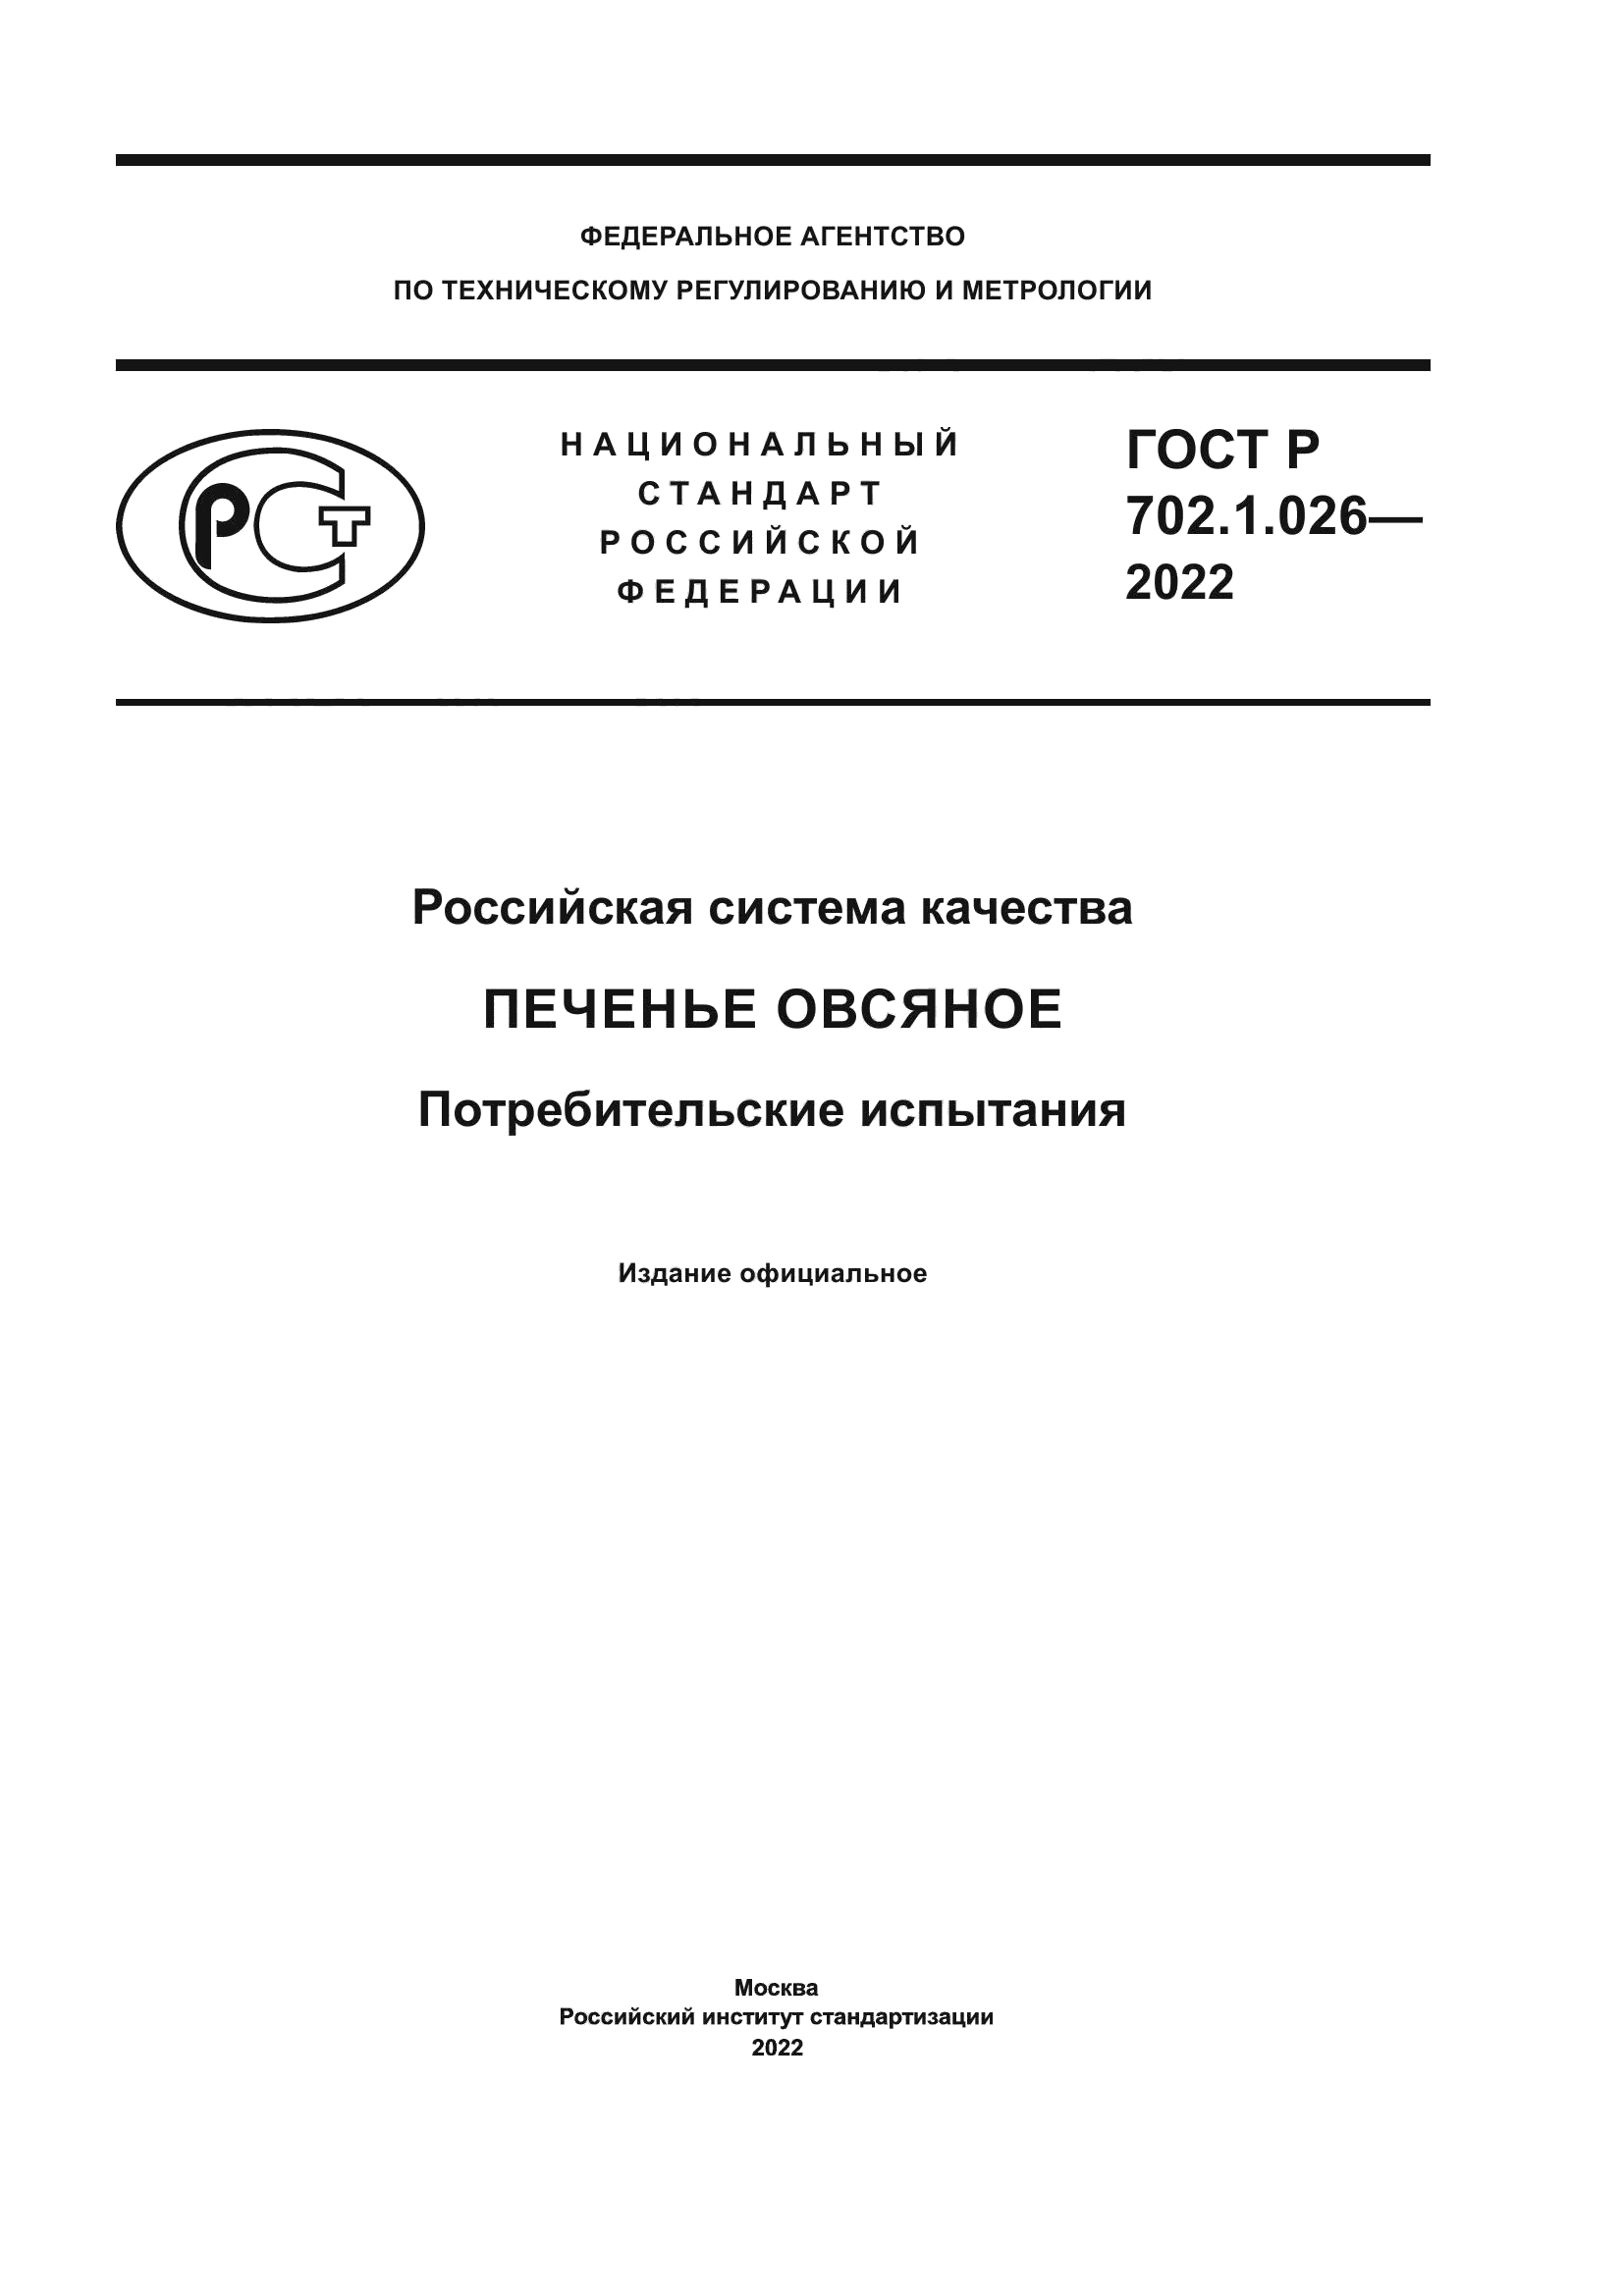 ГОСТ Р 702.1.026-2022